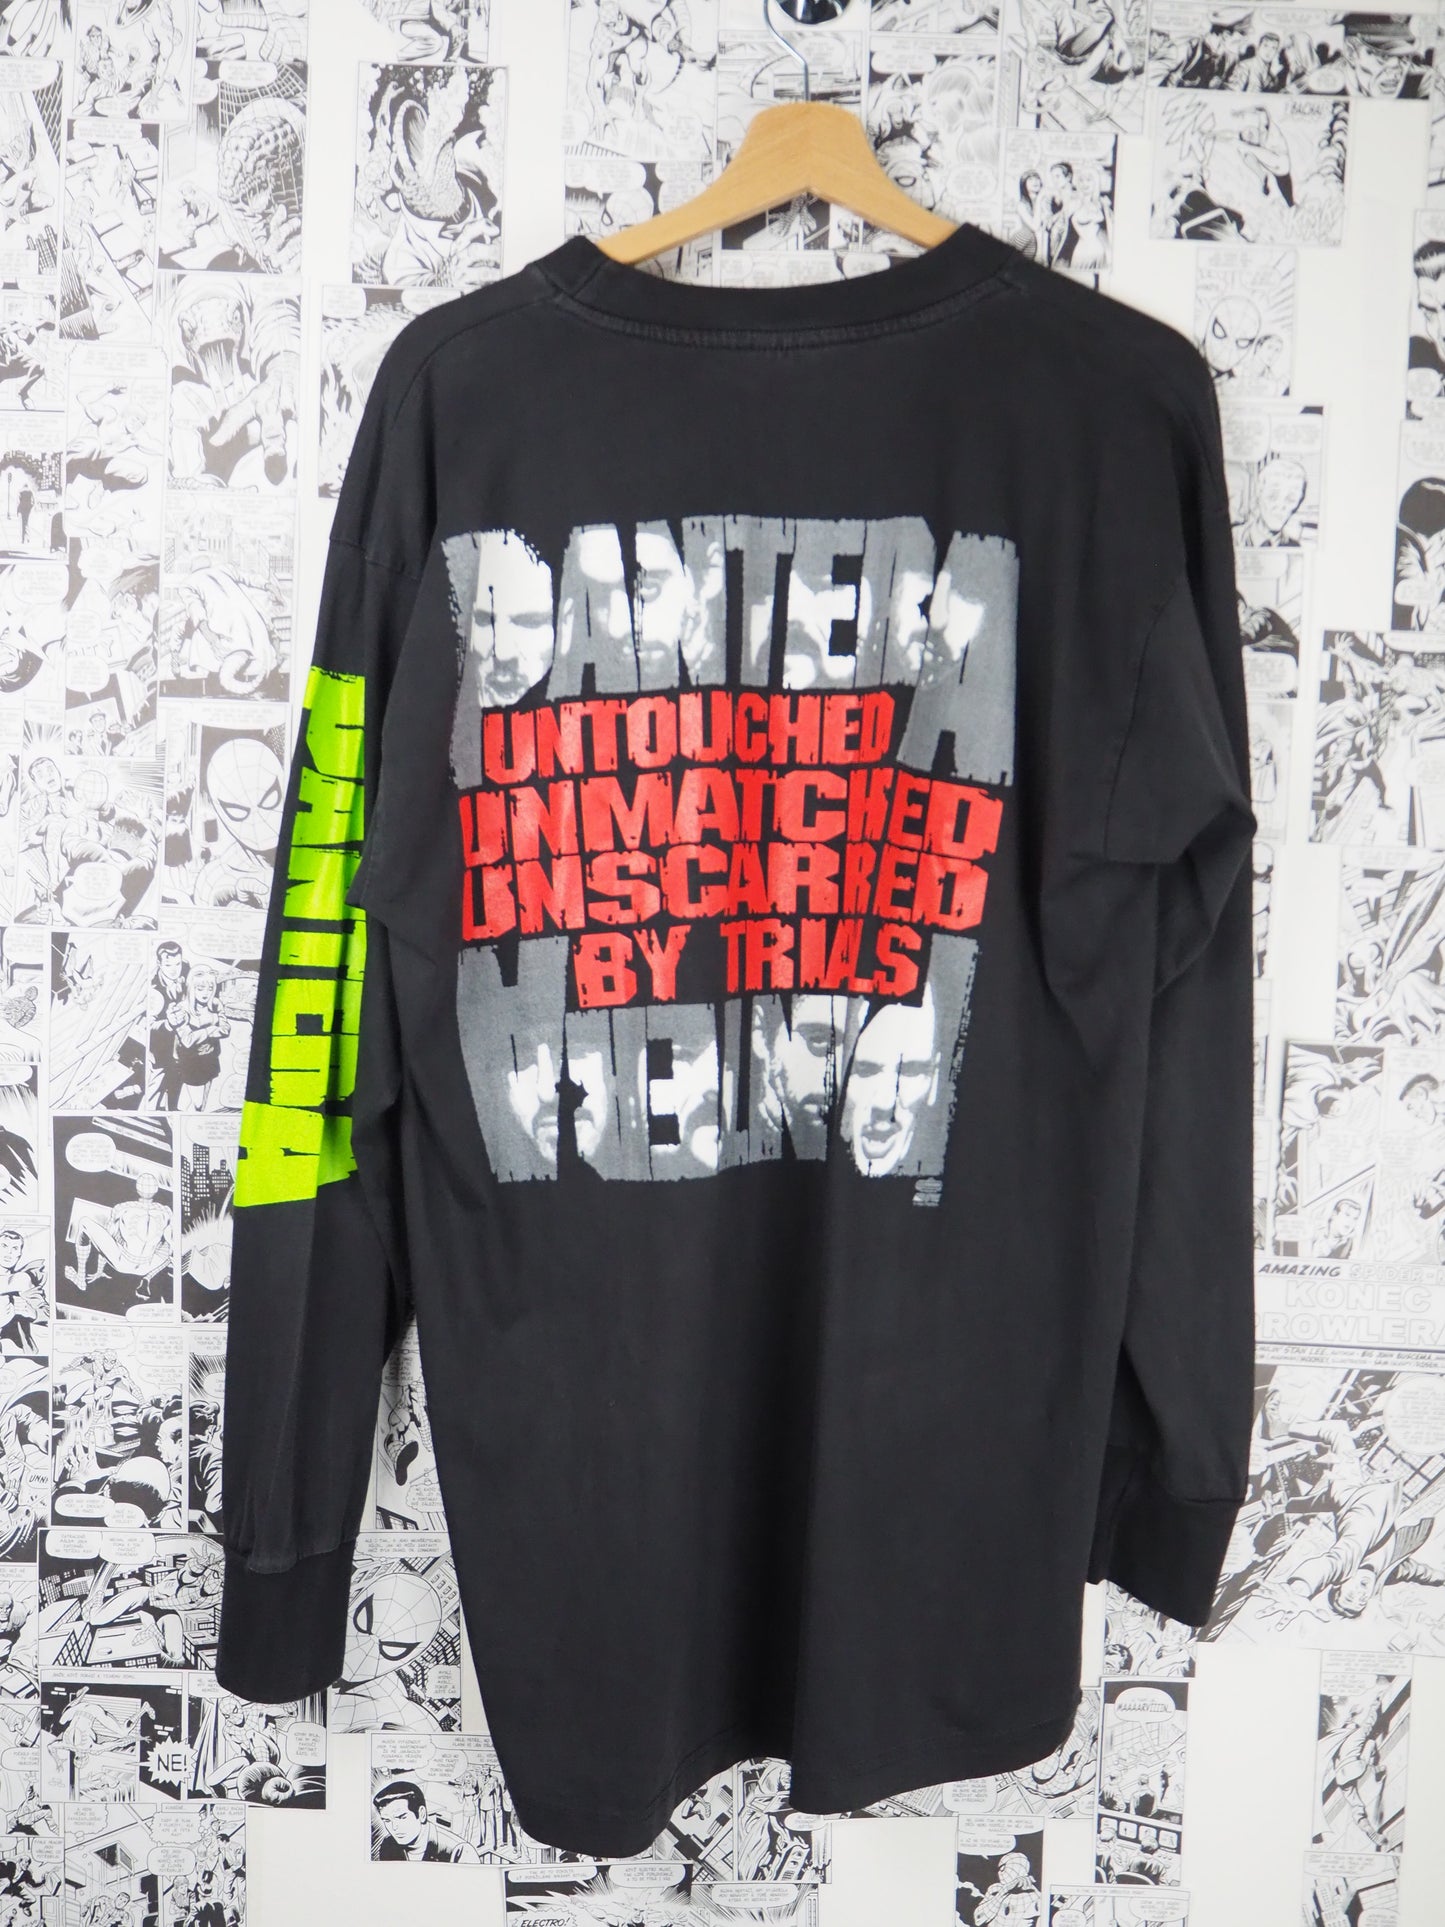 Vintage Pantera "Vulgar Display of Power" 1993 t-shirt - size XL